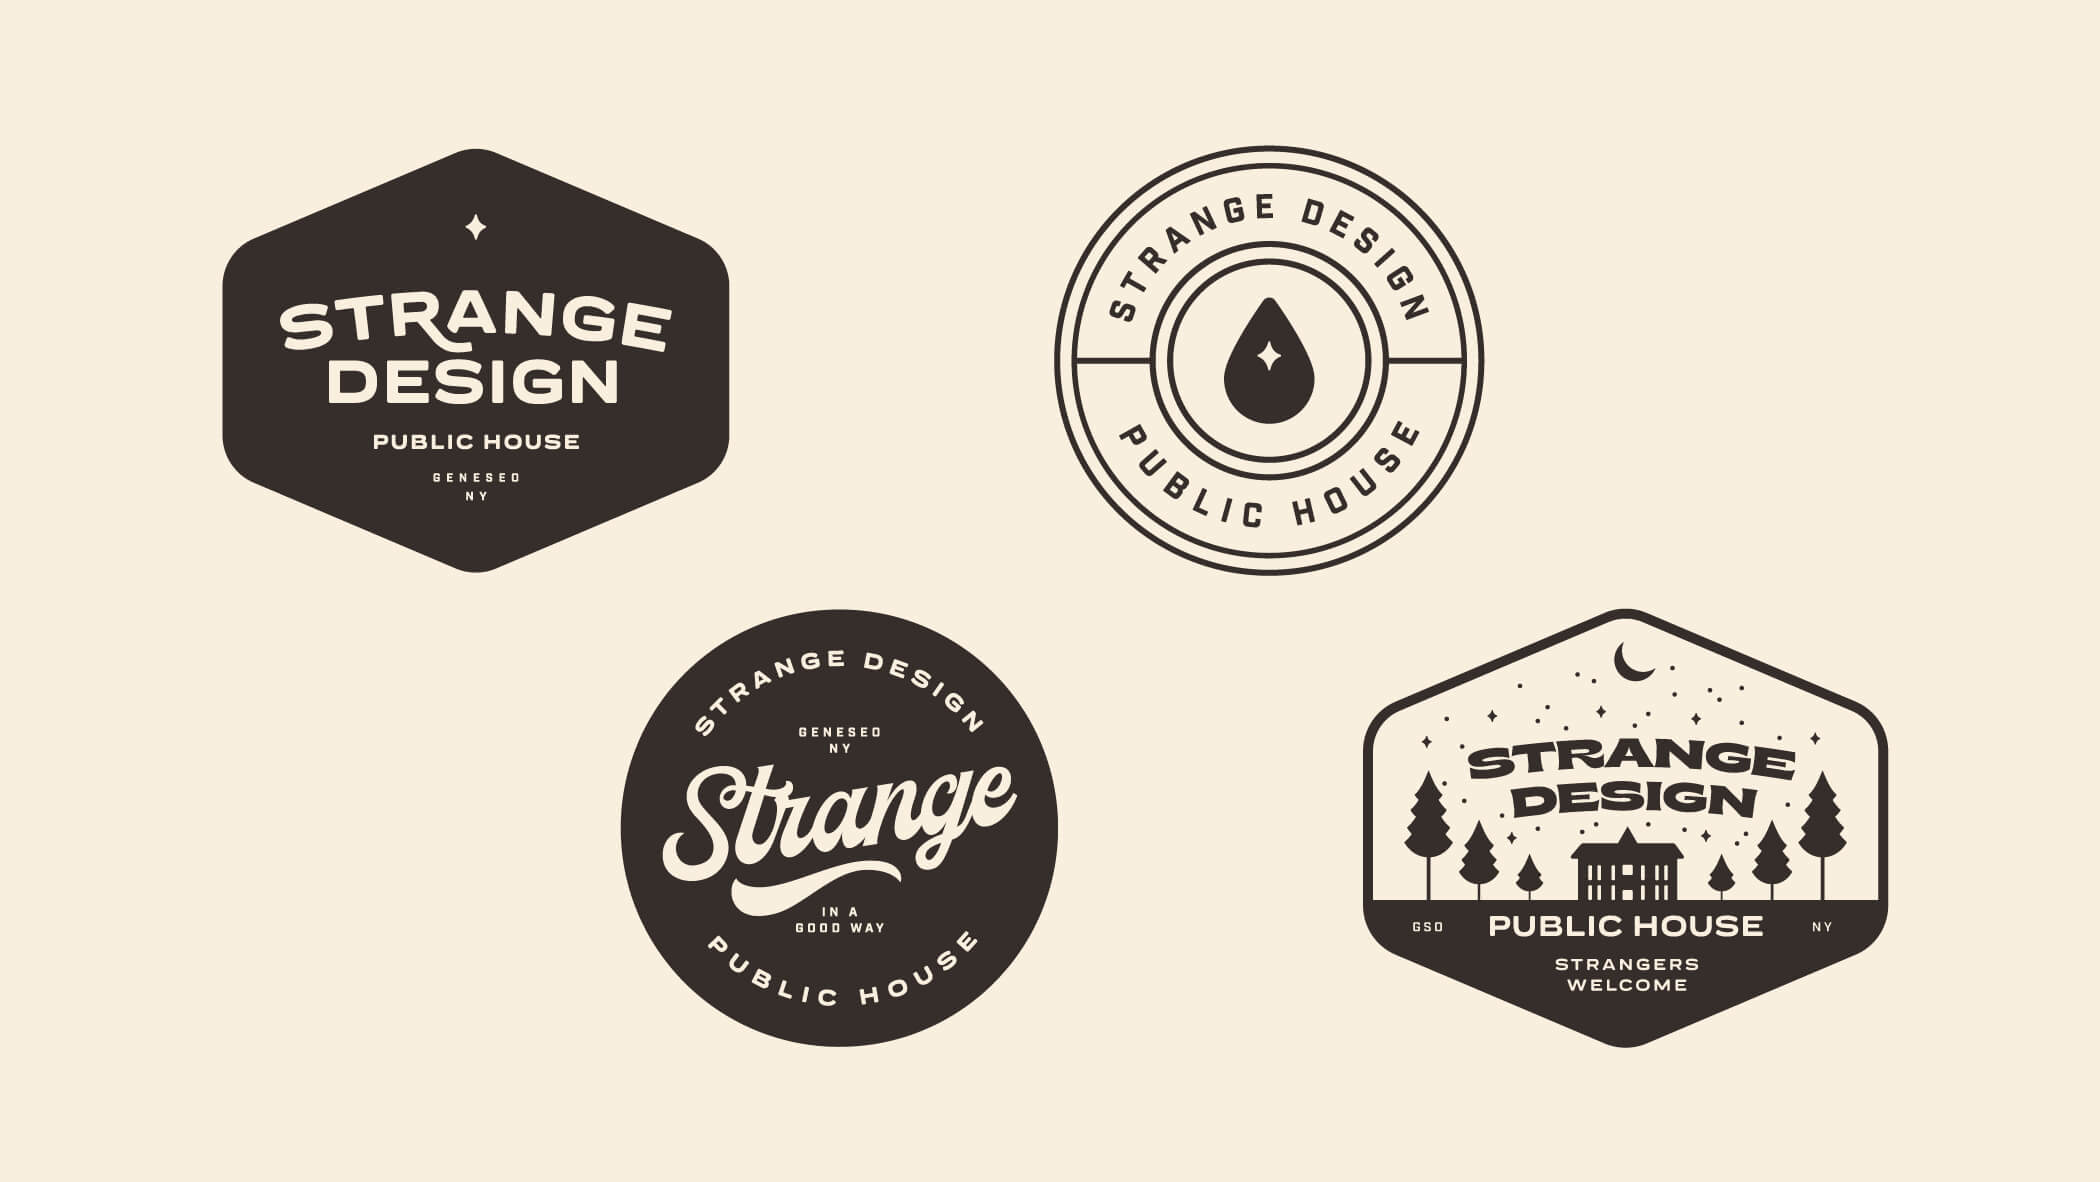 Strange Design Public House Badges